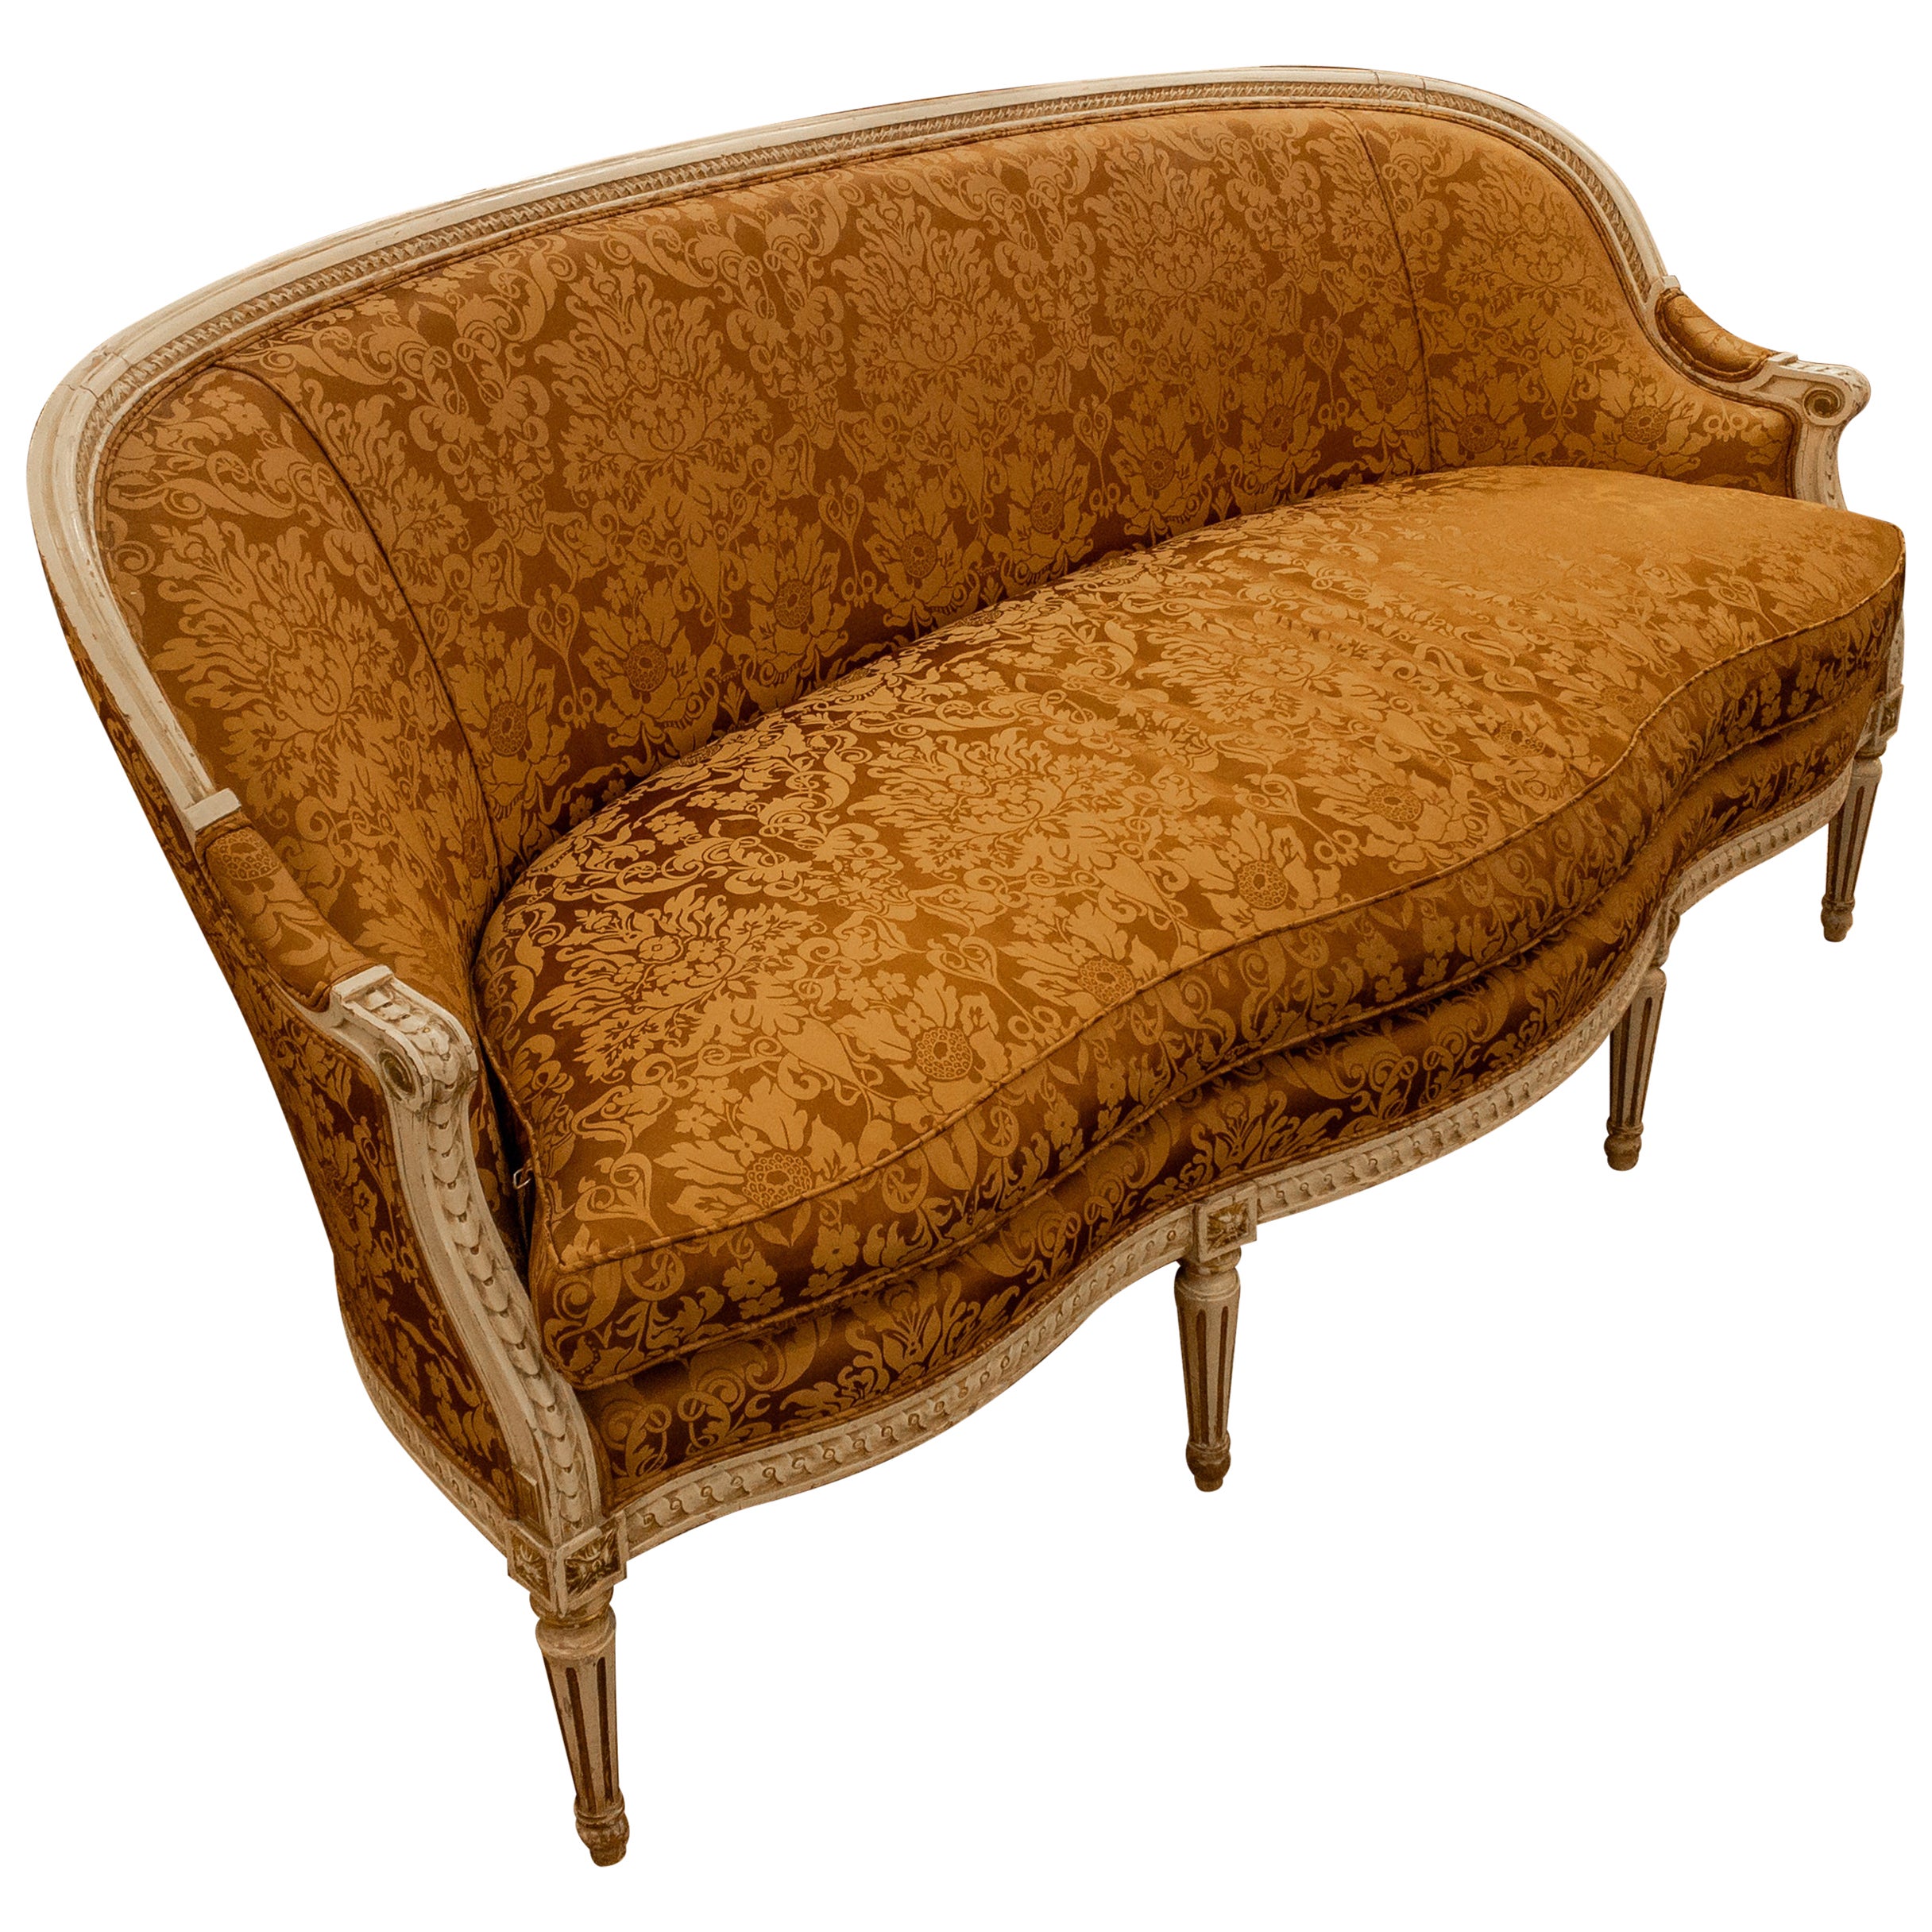 Bemaltes Sofa im Louis-XVI-Stil des 19. Jahrhunderts, neu gepolstert